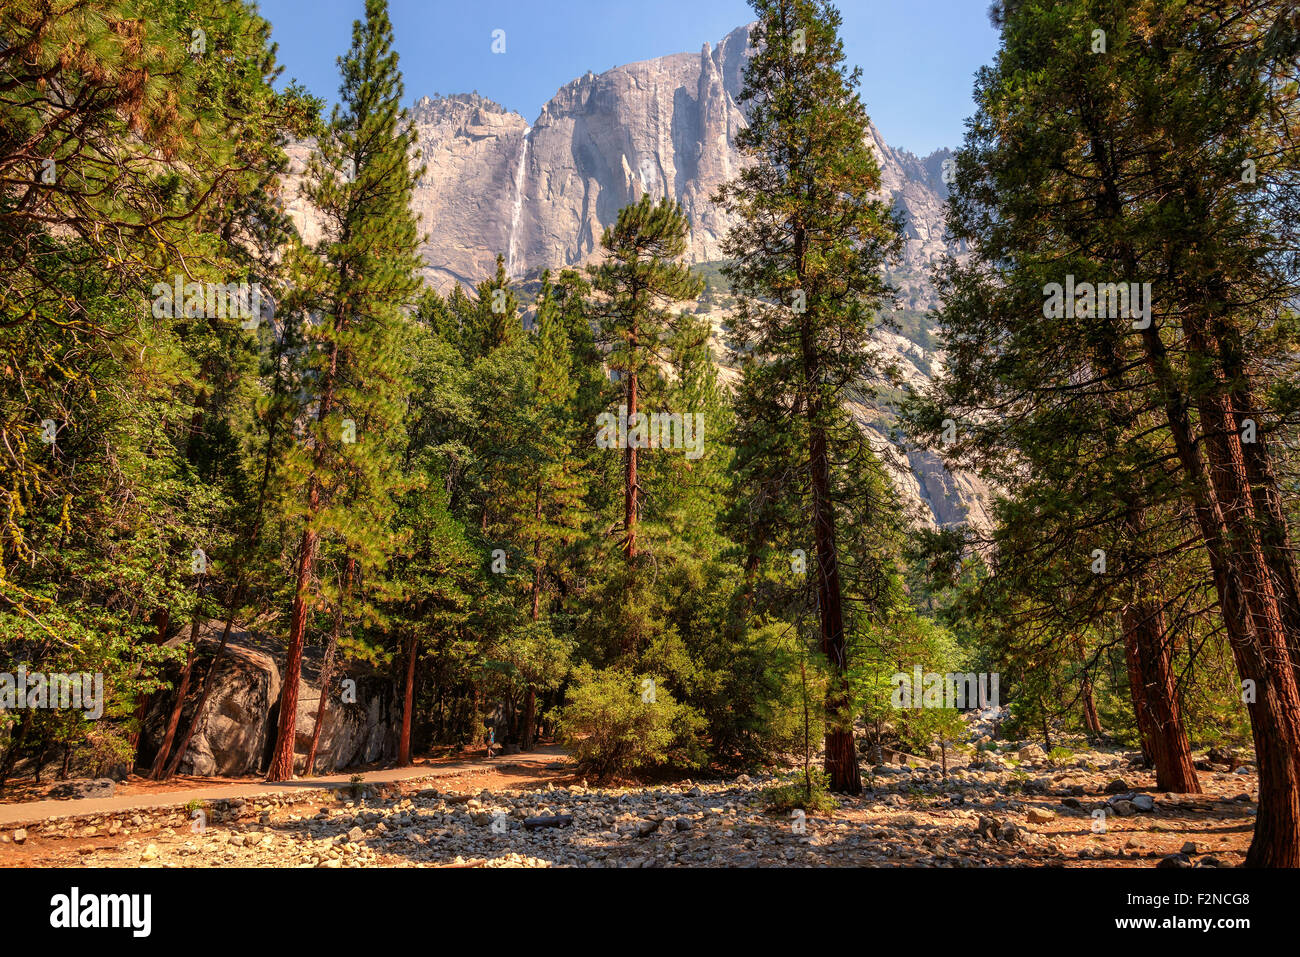 Yosemite Waterfalls behind Sequoias in Yosemite National Park,California Stock Photo